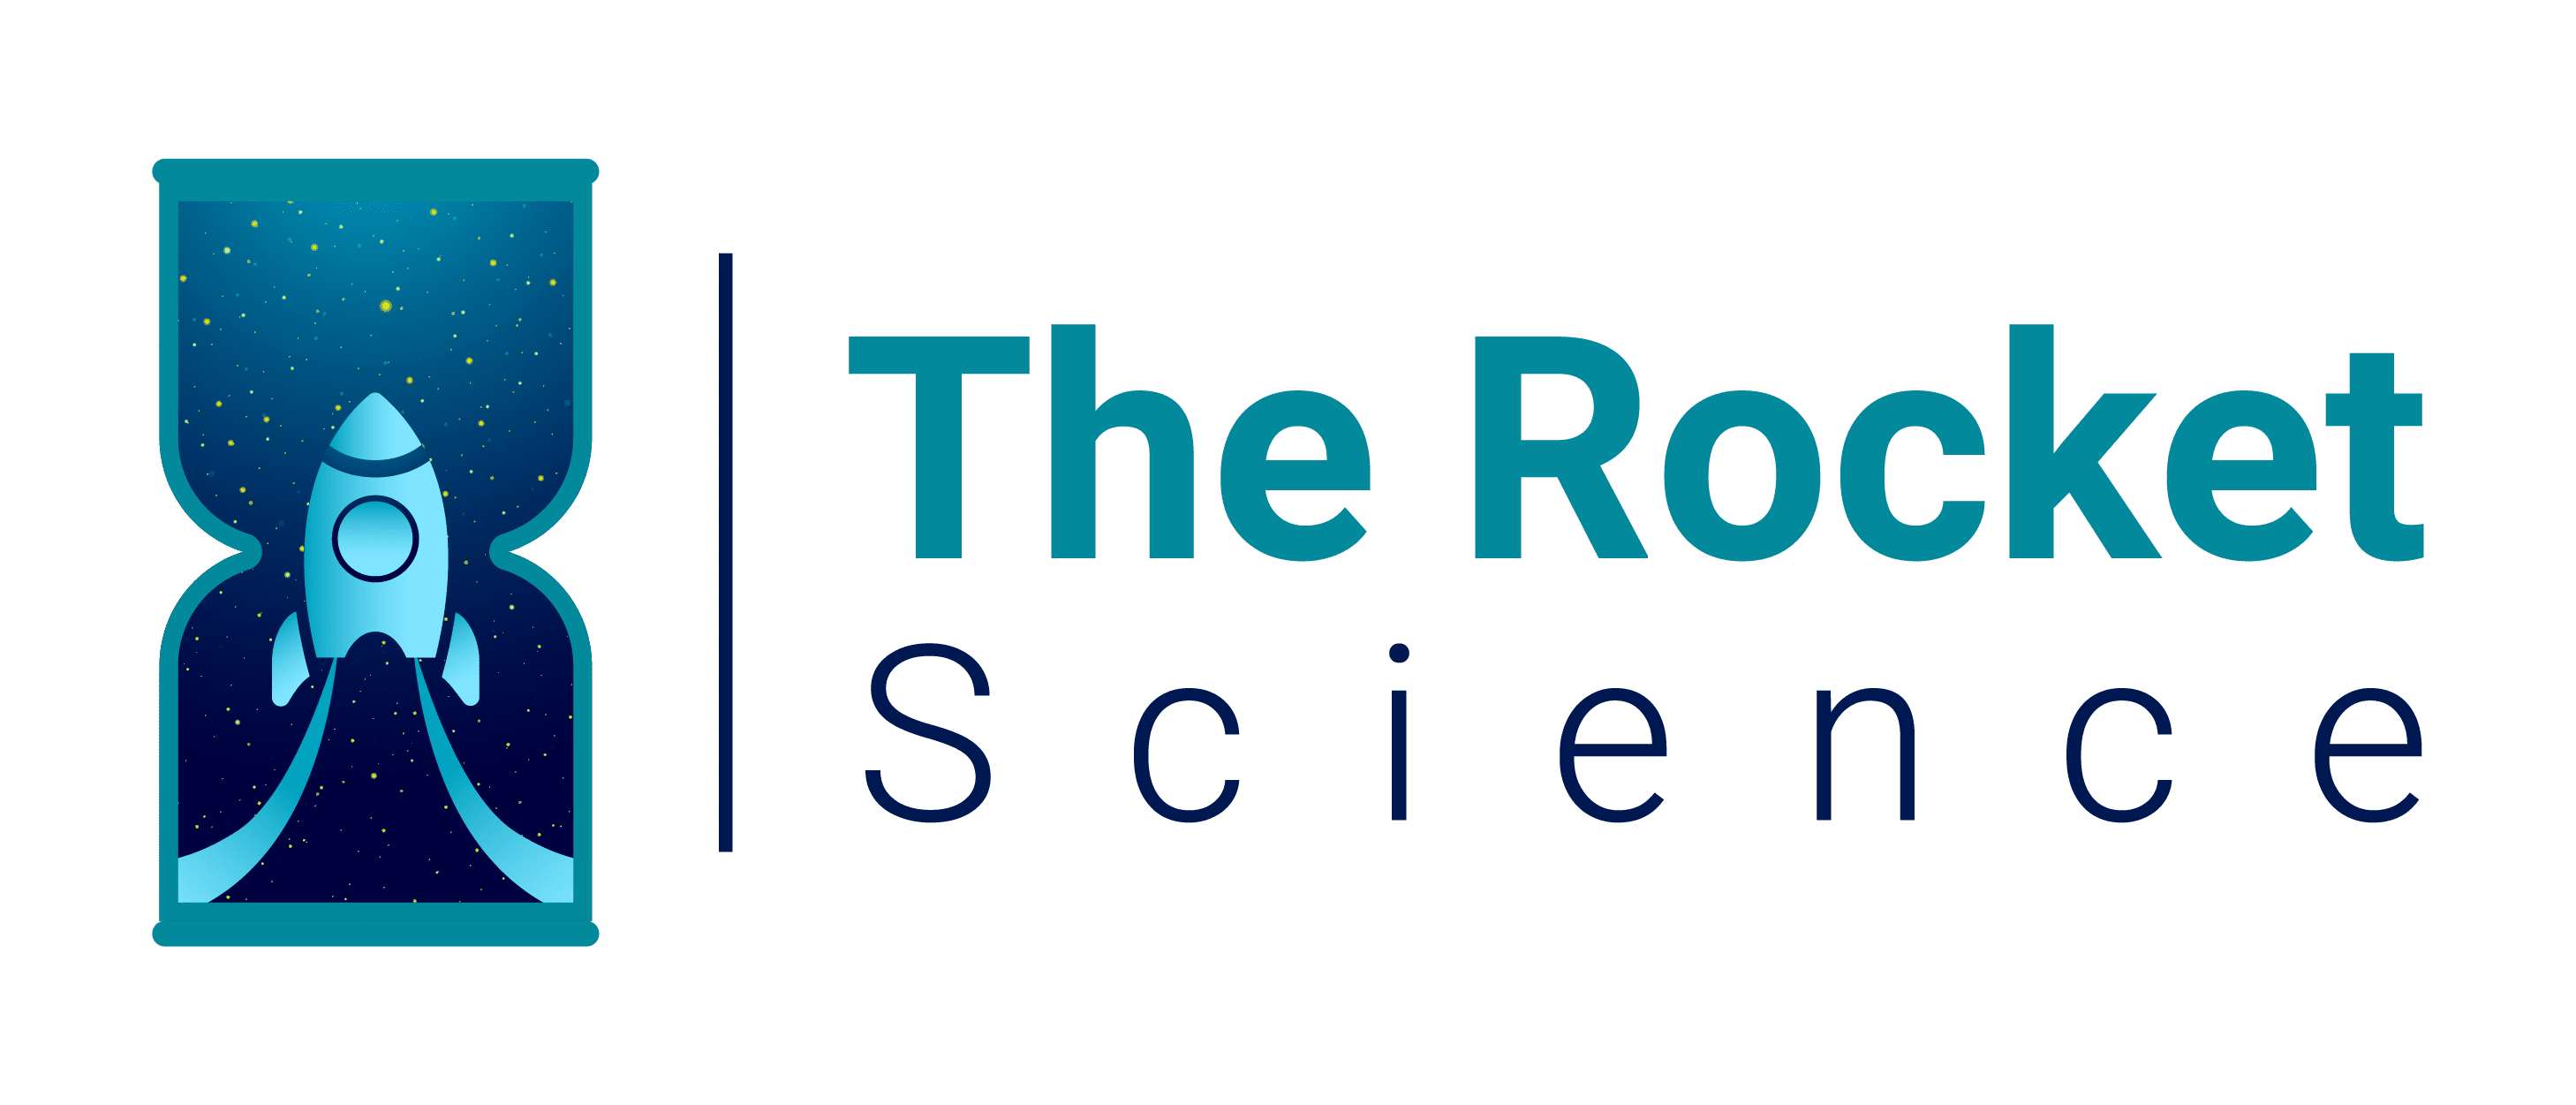 The Rockets Science logo